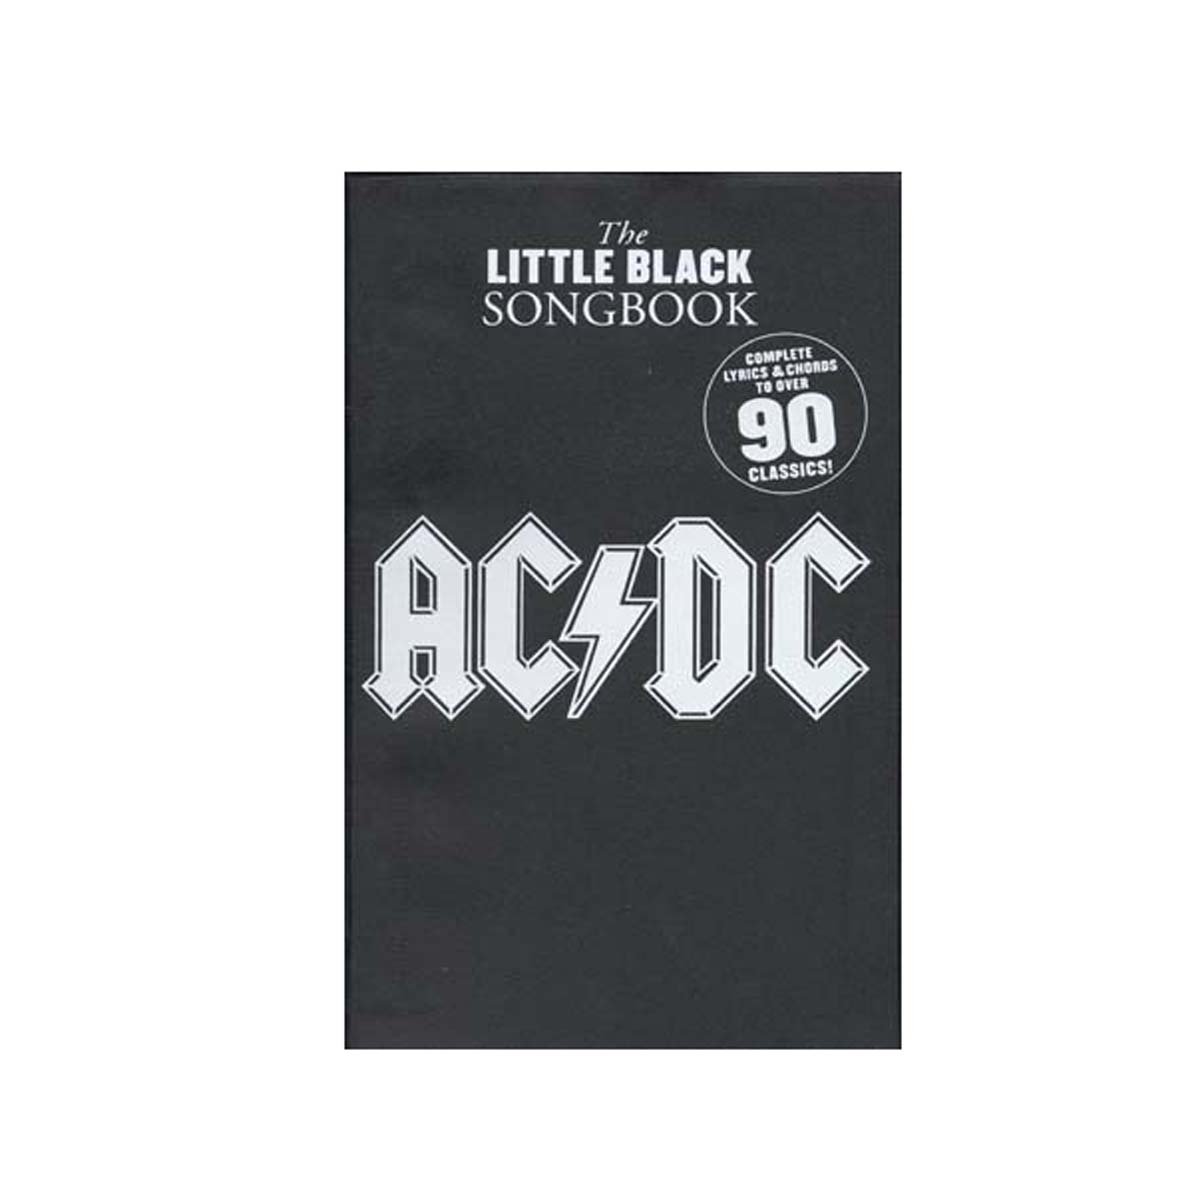  The little black songbook AC/DC 90 classics